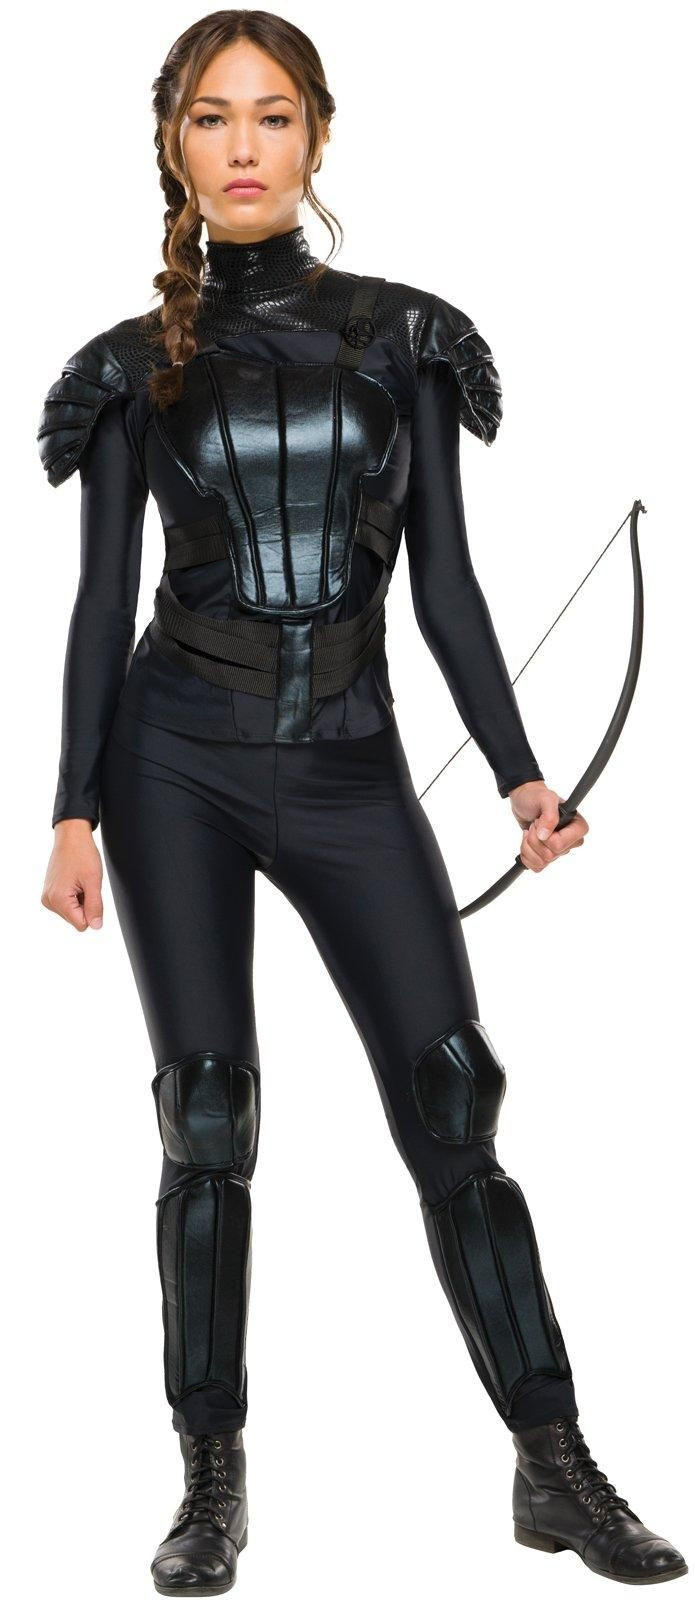 DIY Katniss Costume
 The Hunger Games Mockingjay Part 1 Deluxe Womens Katniss